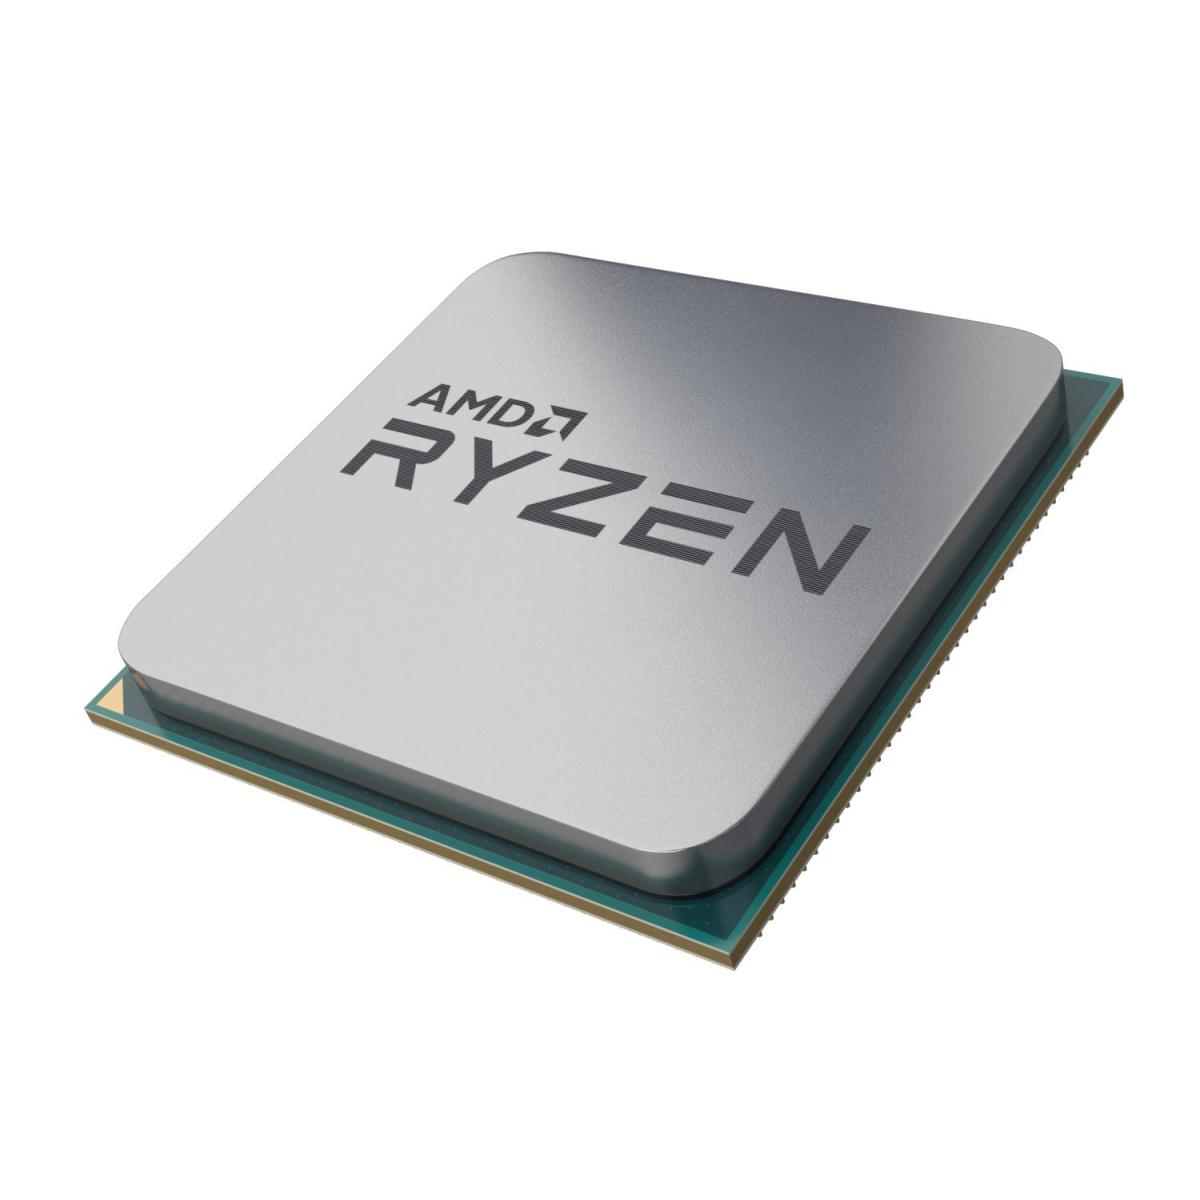 AMD RYZEN 5 2600X 6-Core 3.6 GHz (4.2 GHz Max Boost) | YD260XBCAFBOX